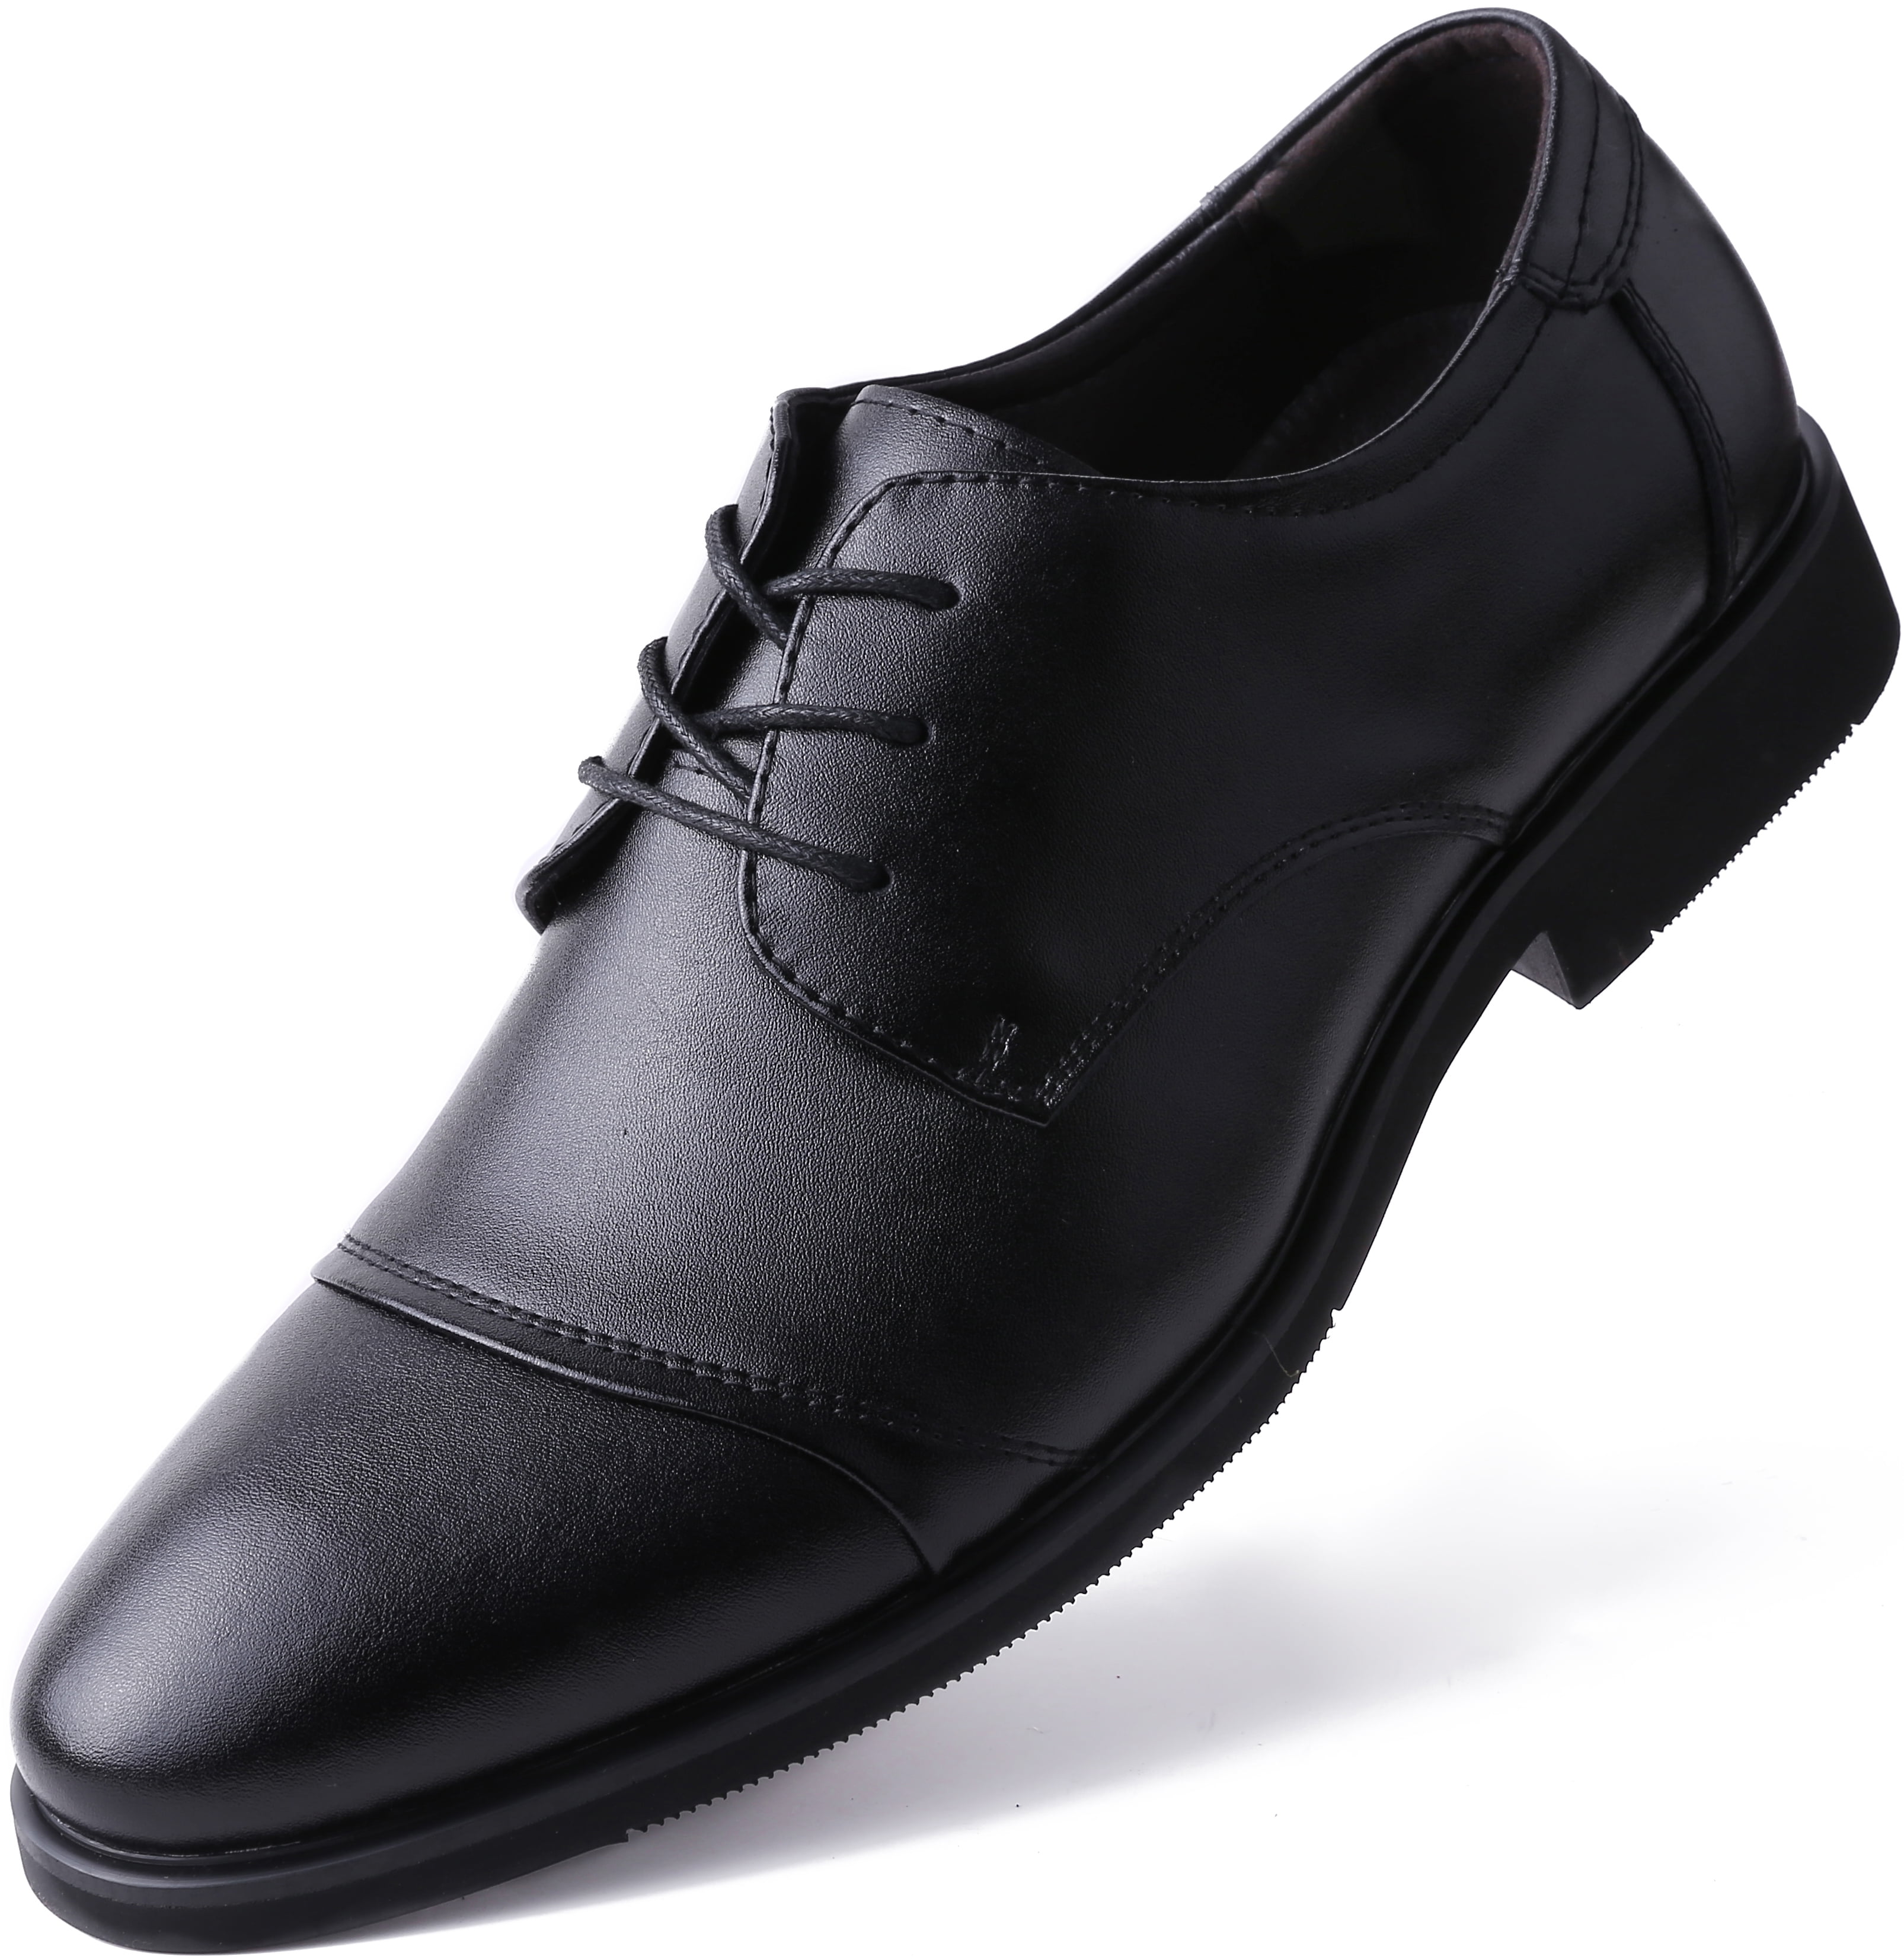 mens black dress shoes walmart